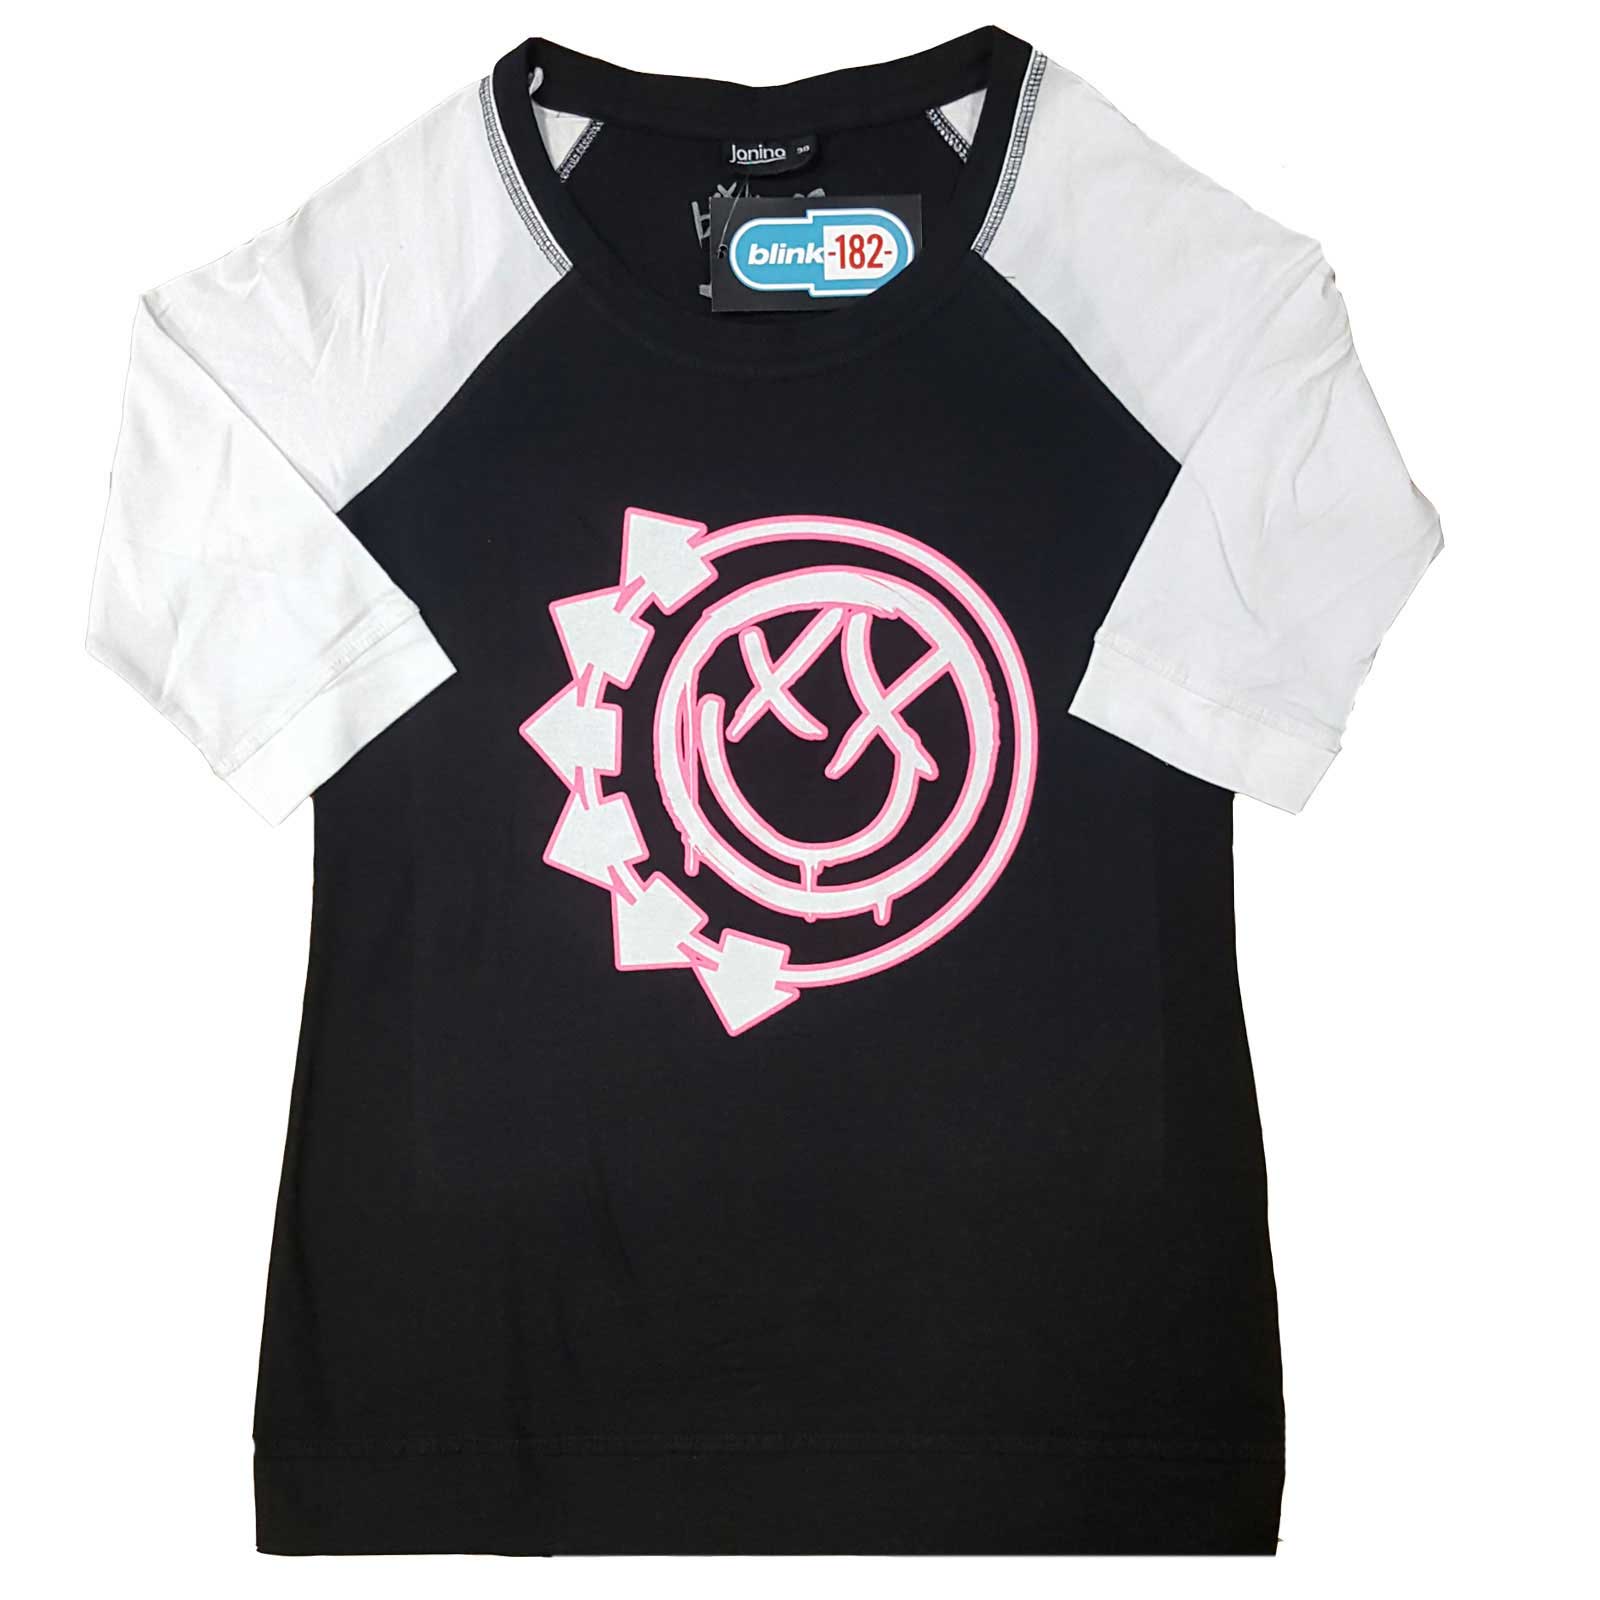 Blink-182 Ladies Raglan T-Shirt: Six Arrow Smiley